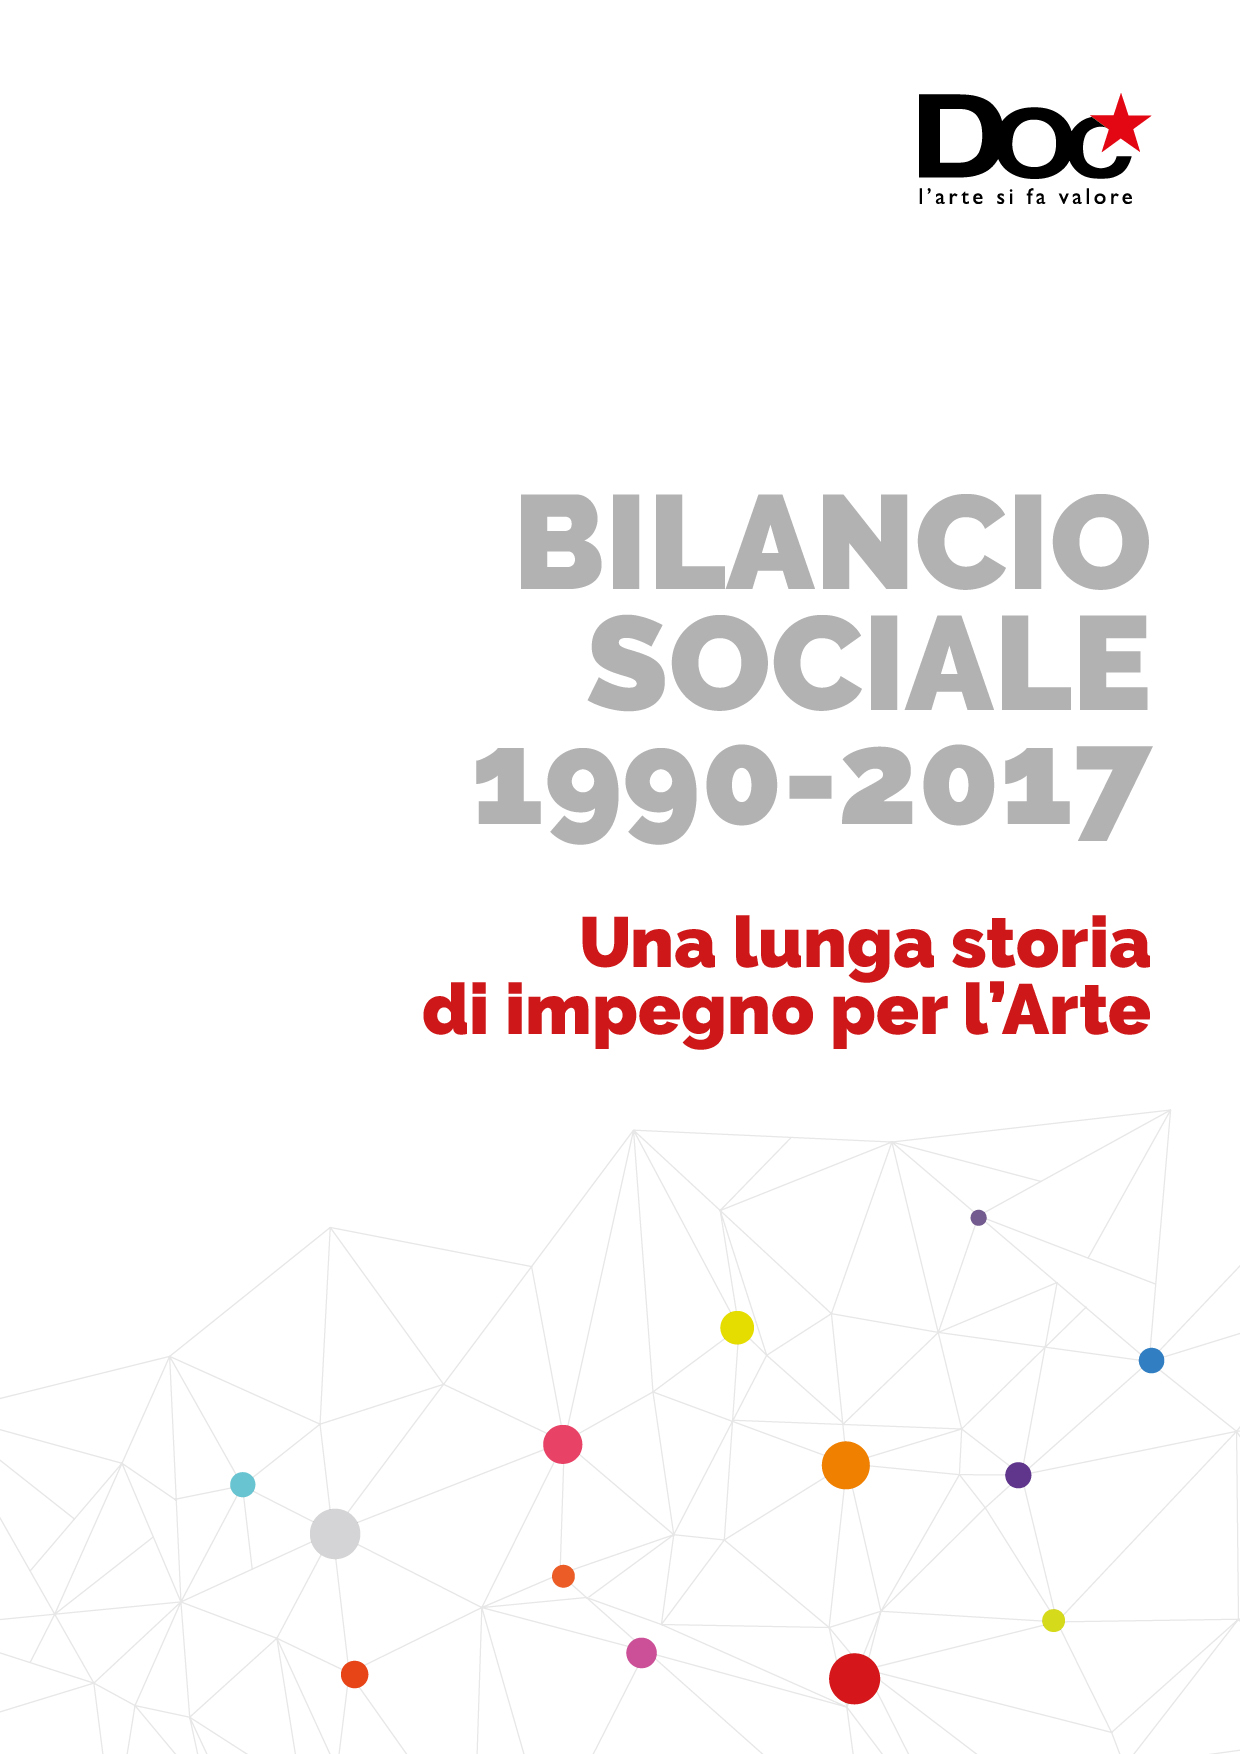 Rete Doc Bilancio Sociale 1990-2017